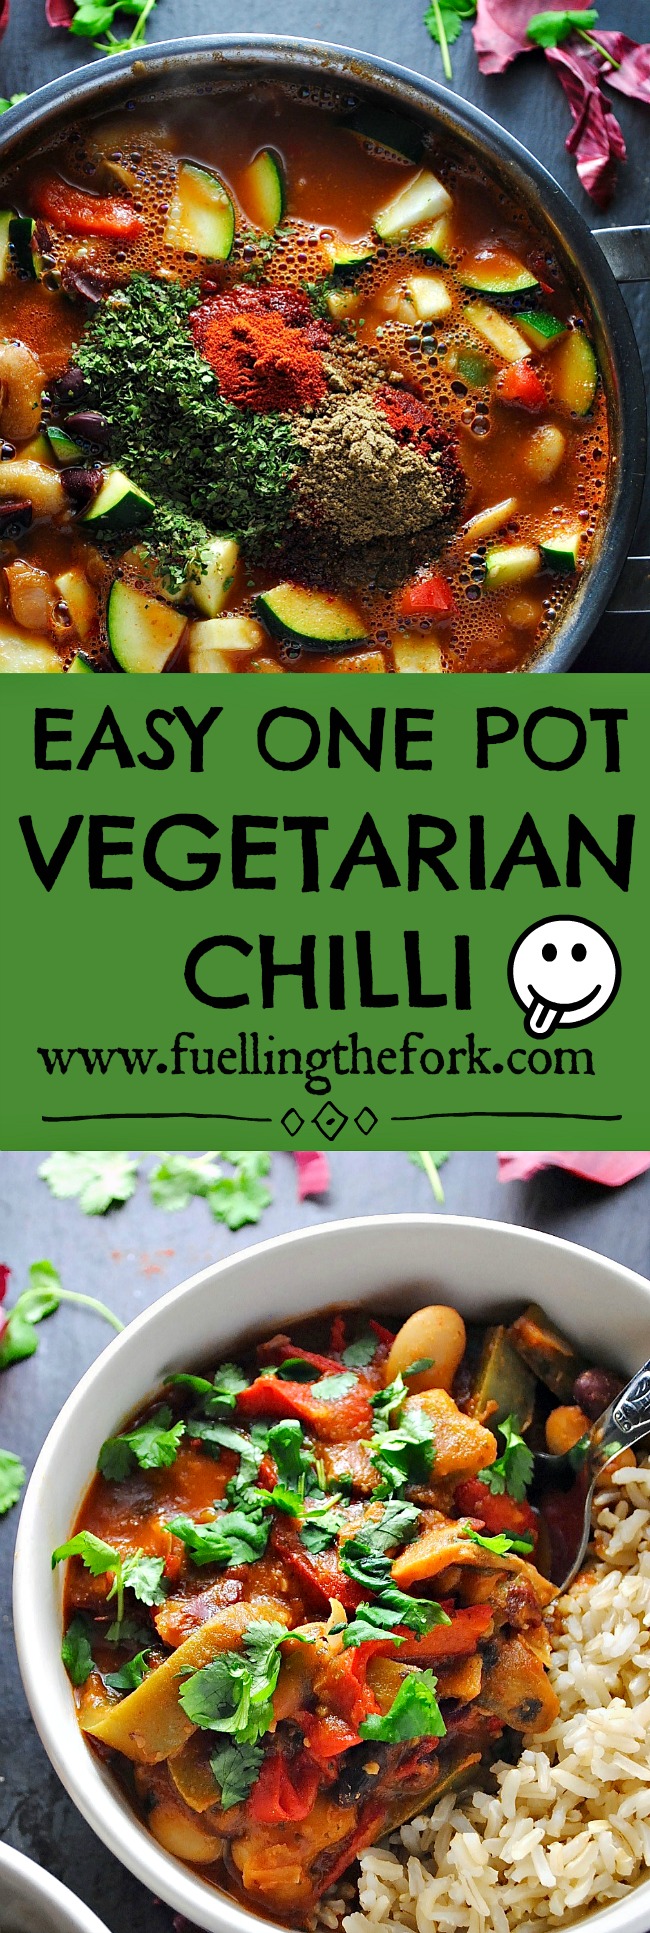 Easy One Pot Vegetarian Chilli